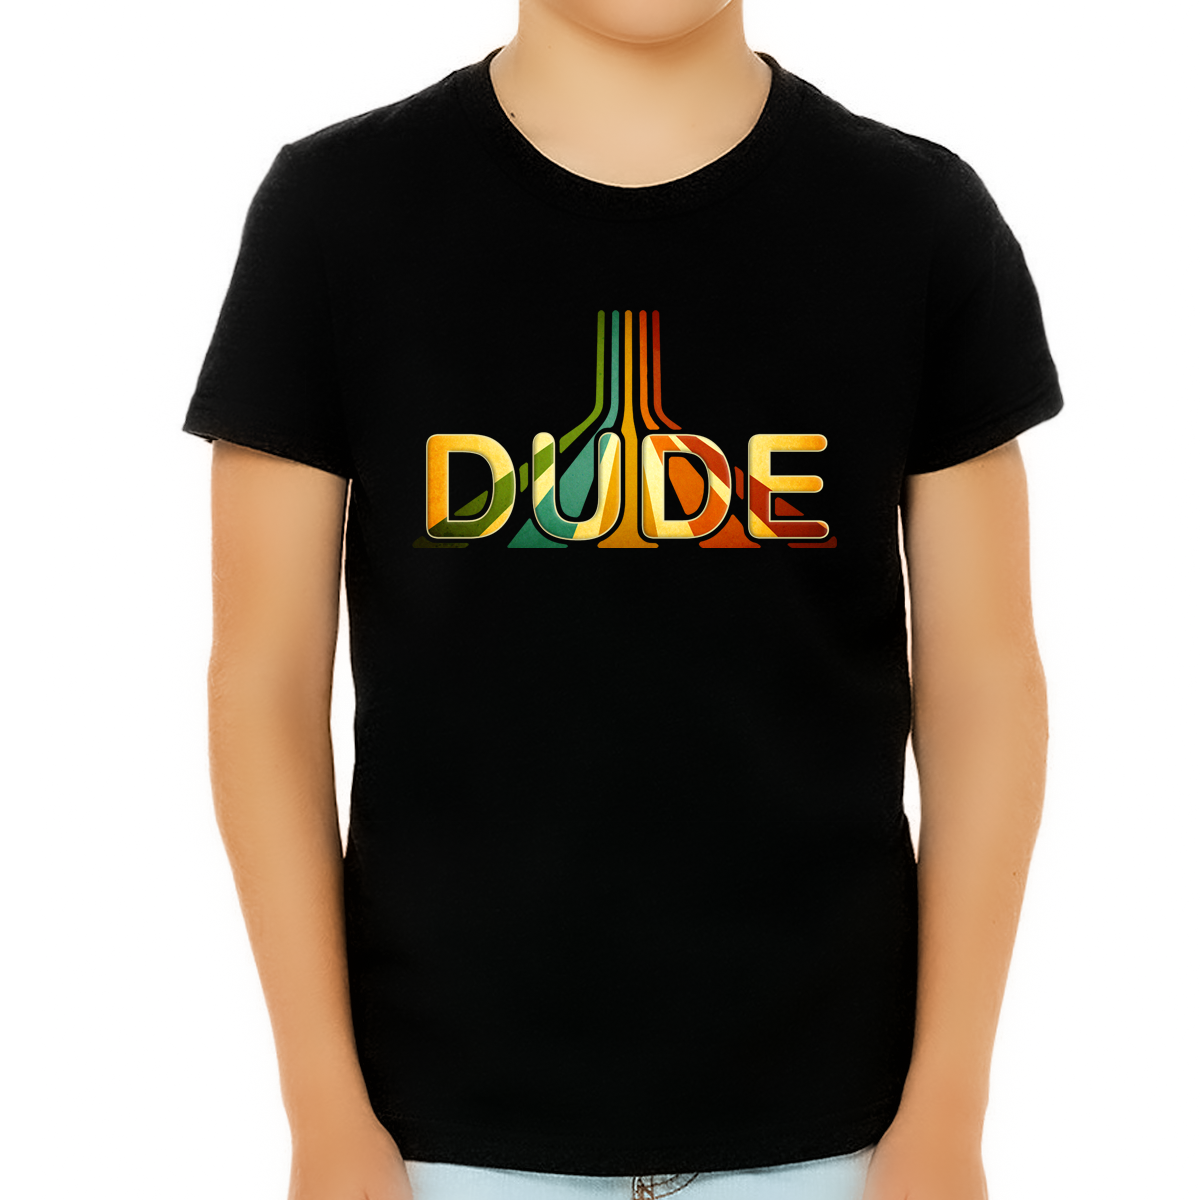 Perfect Dude Merchandise - Perfect Dude Shirt for BOYS YOUTH KIDS - Retro Vintage Graphic Tees - Big Lebowski Shirt